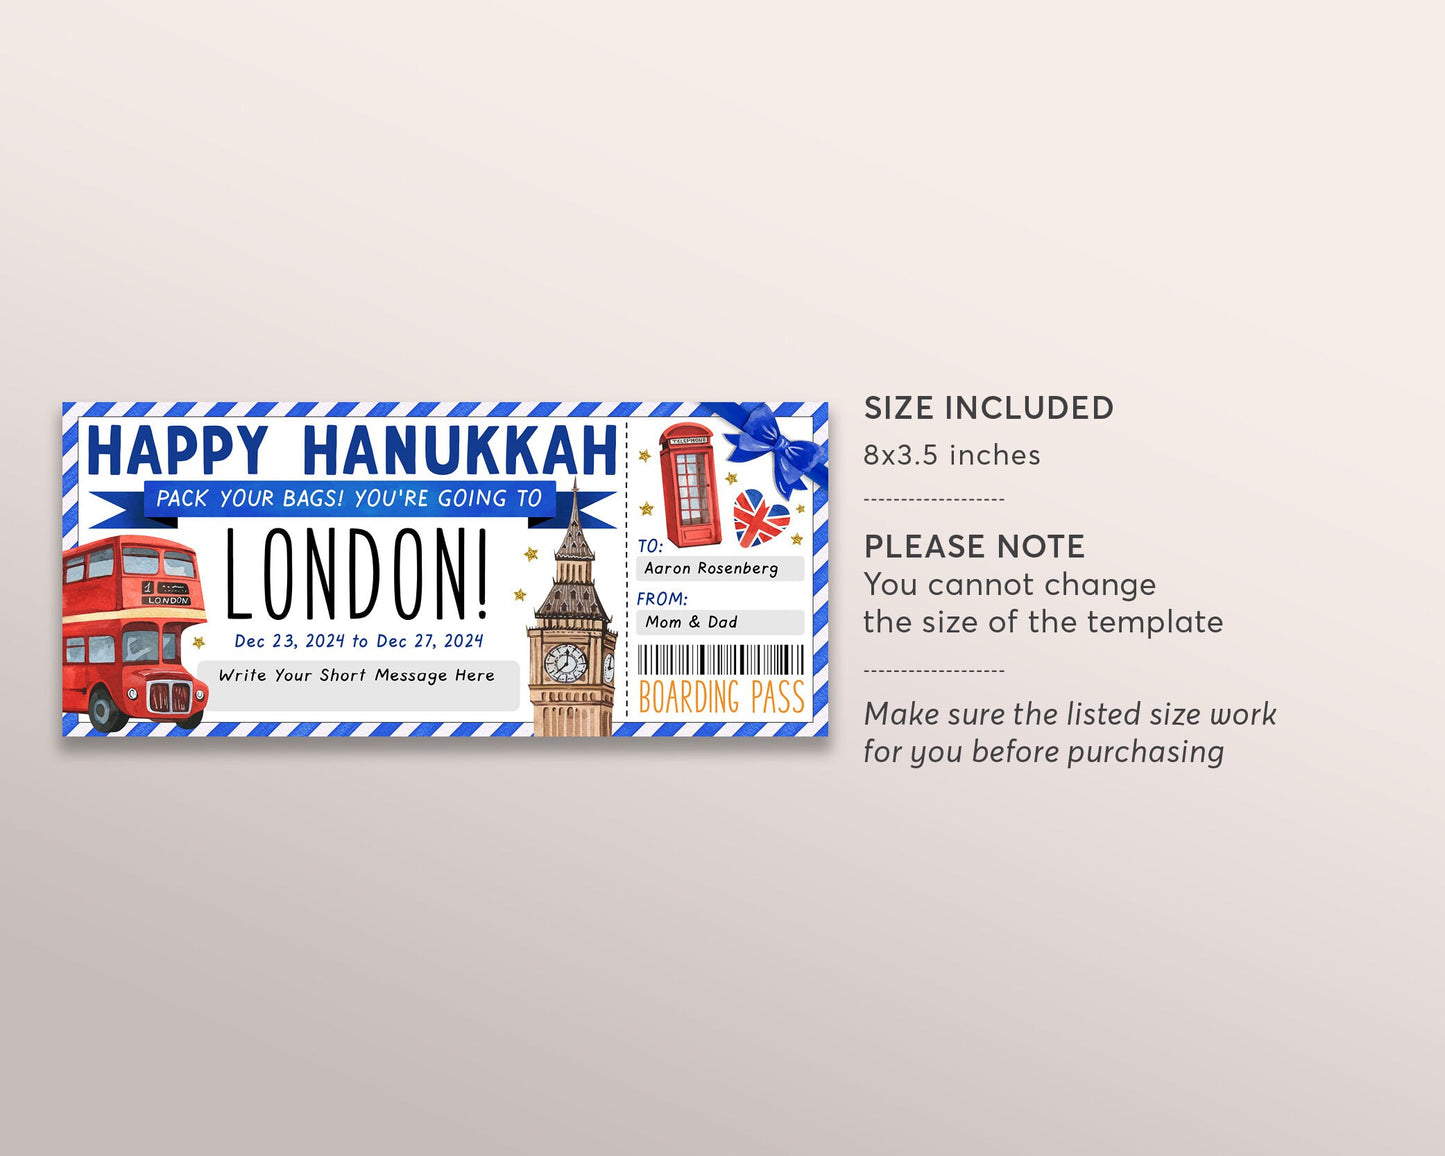 Hanukkah London Gift Ticket Boarding Pass Editable Template, Chanukah Surprise Travel Vacation Plane Ticket Certificate England Holiday Trip